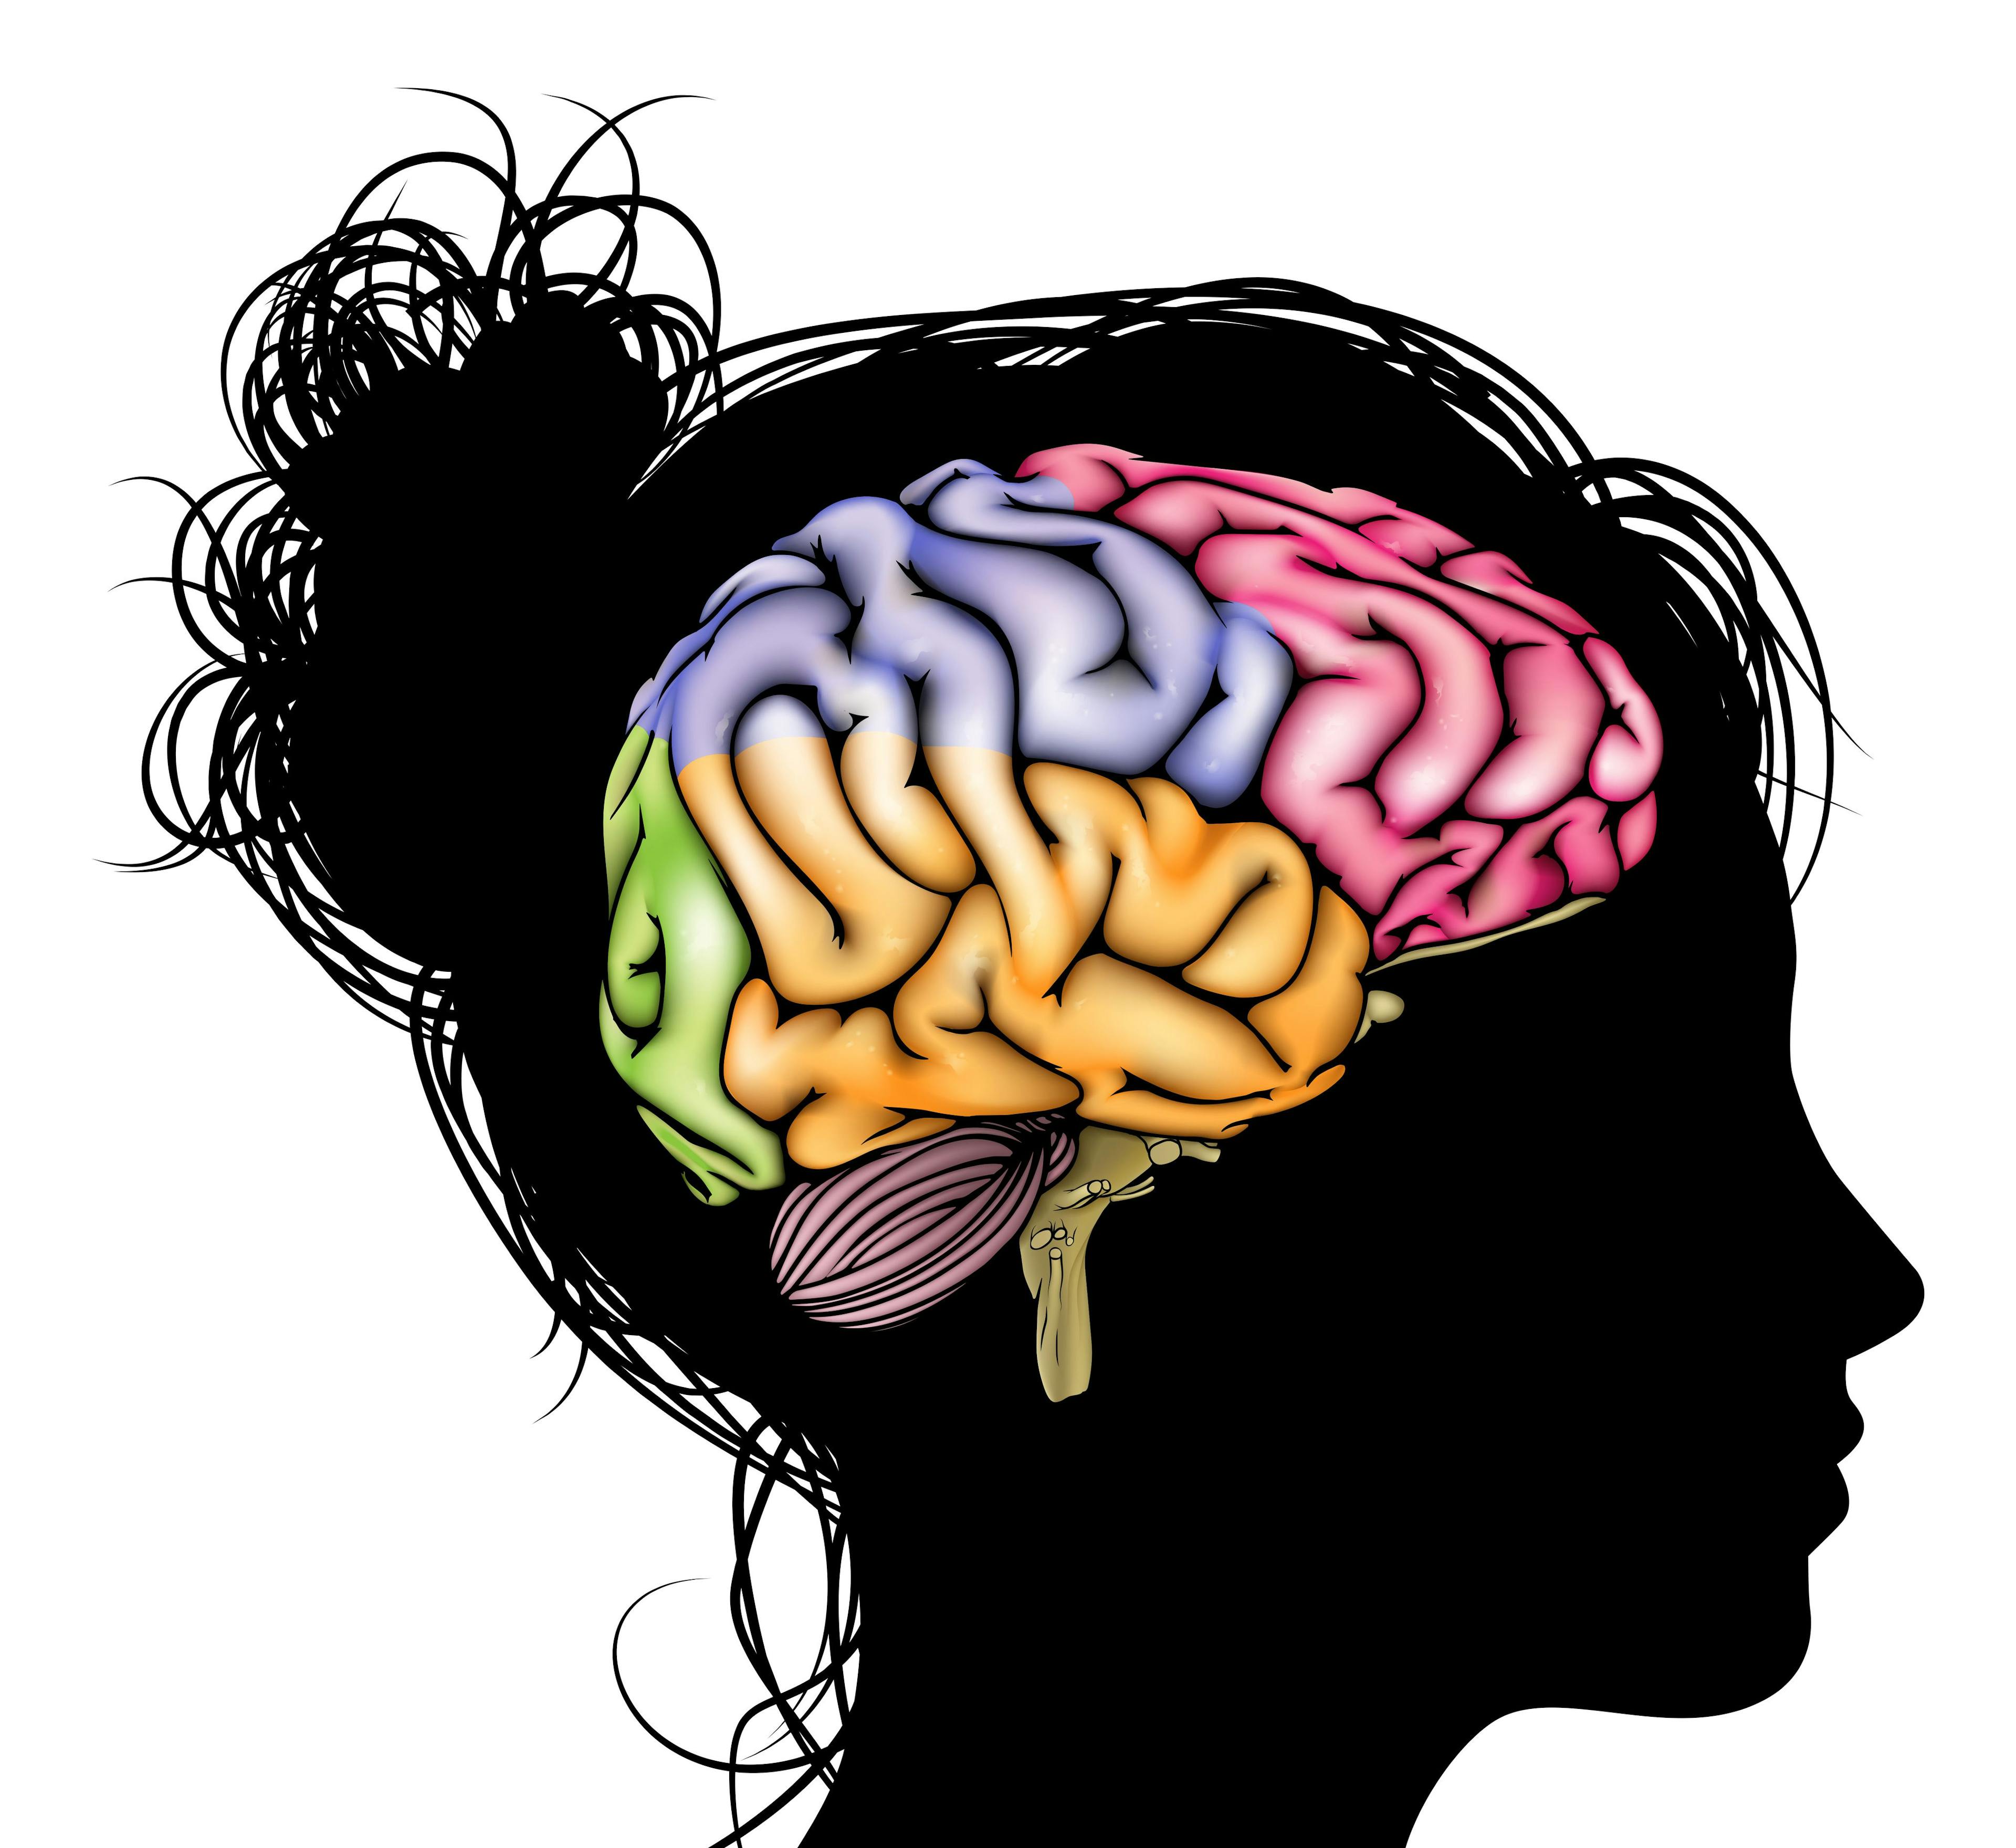 brain illustration in a women's facial silhouette